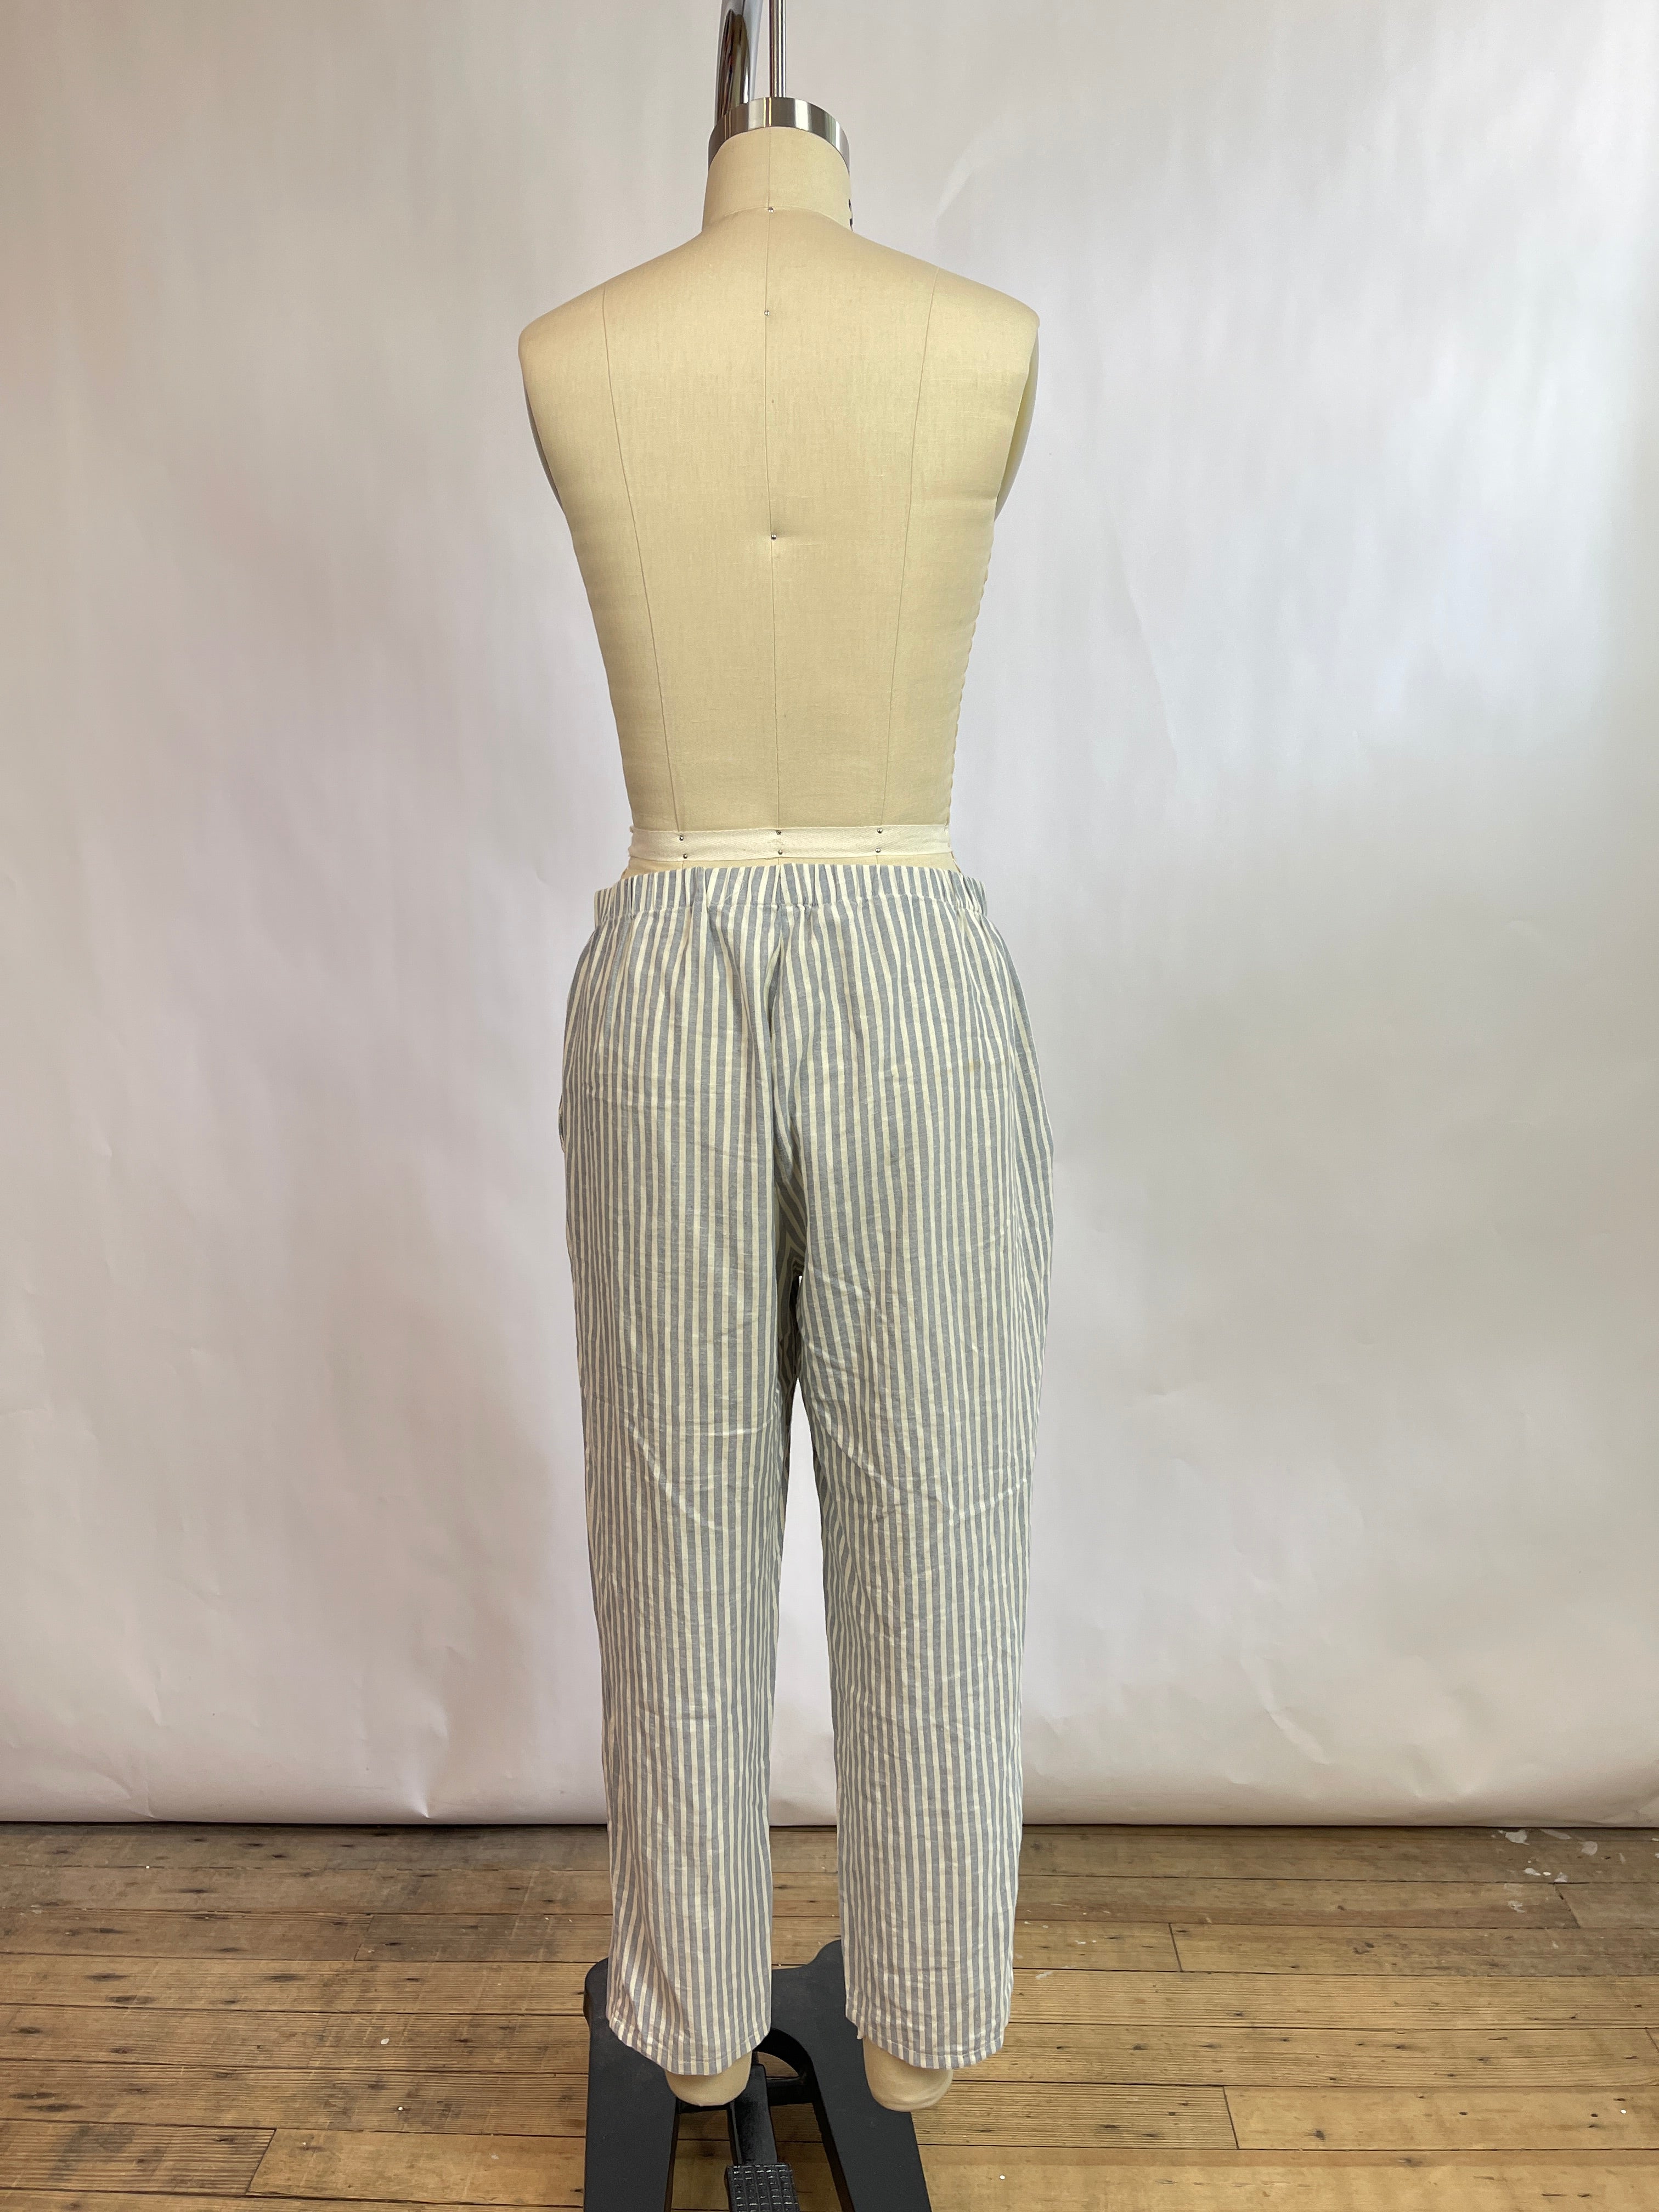 Eileen Fisher Striped Pants (XS)